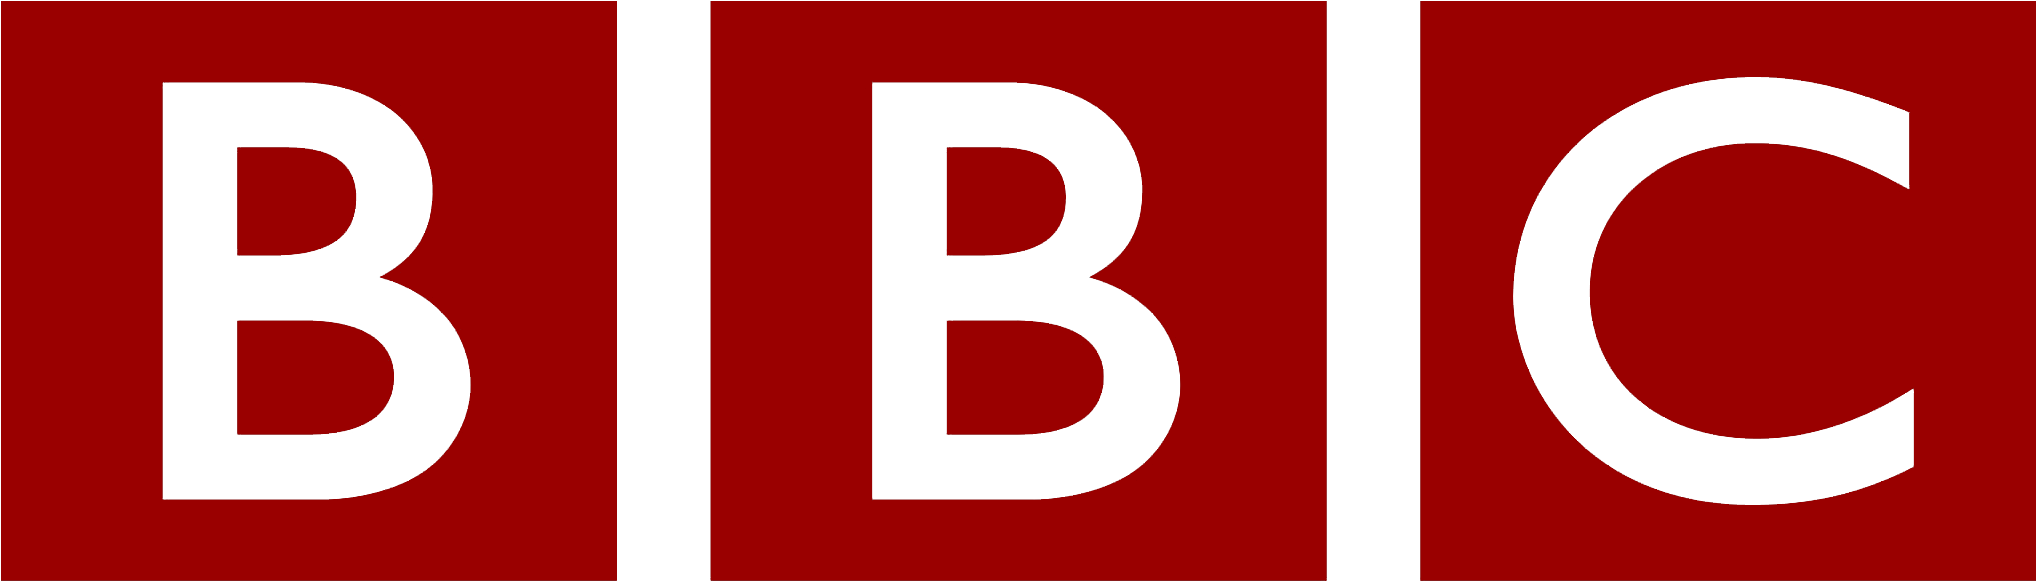 Bbc - Bbc 3 Logo Png (2176x680), Png Download